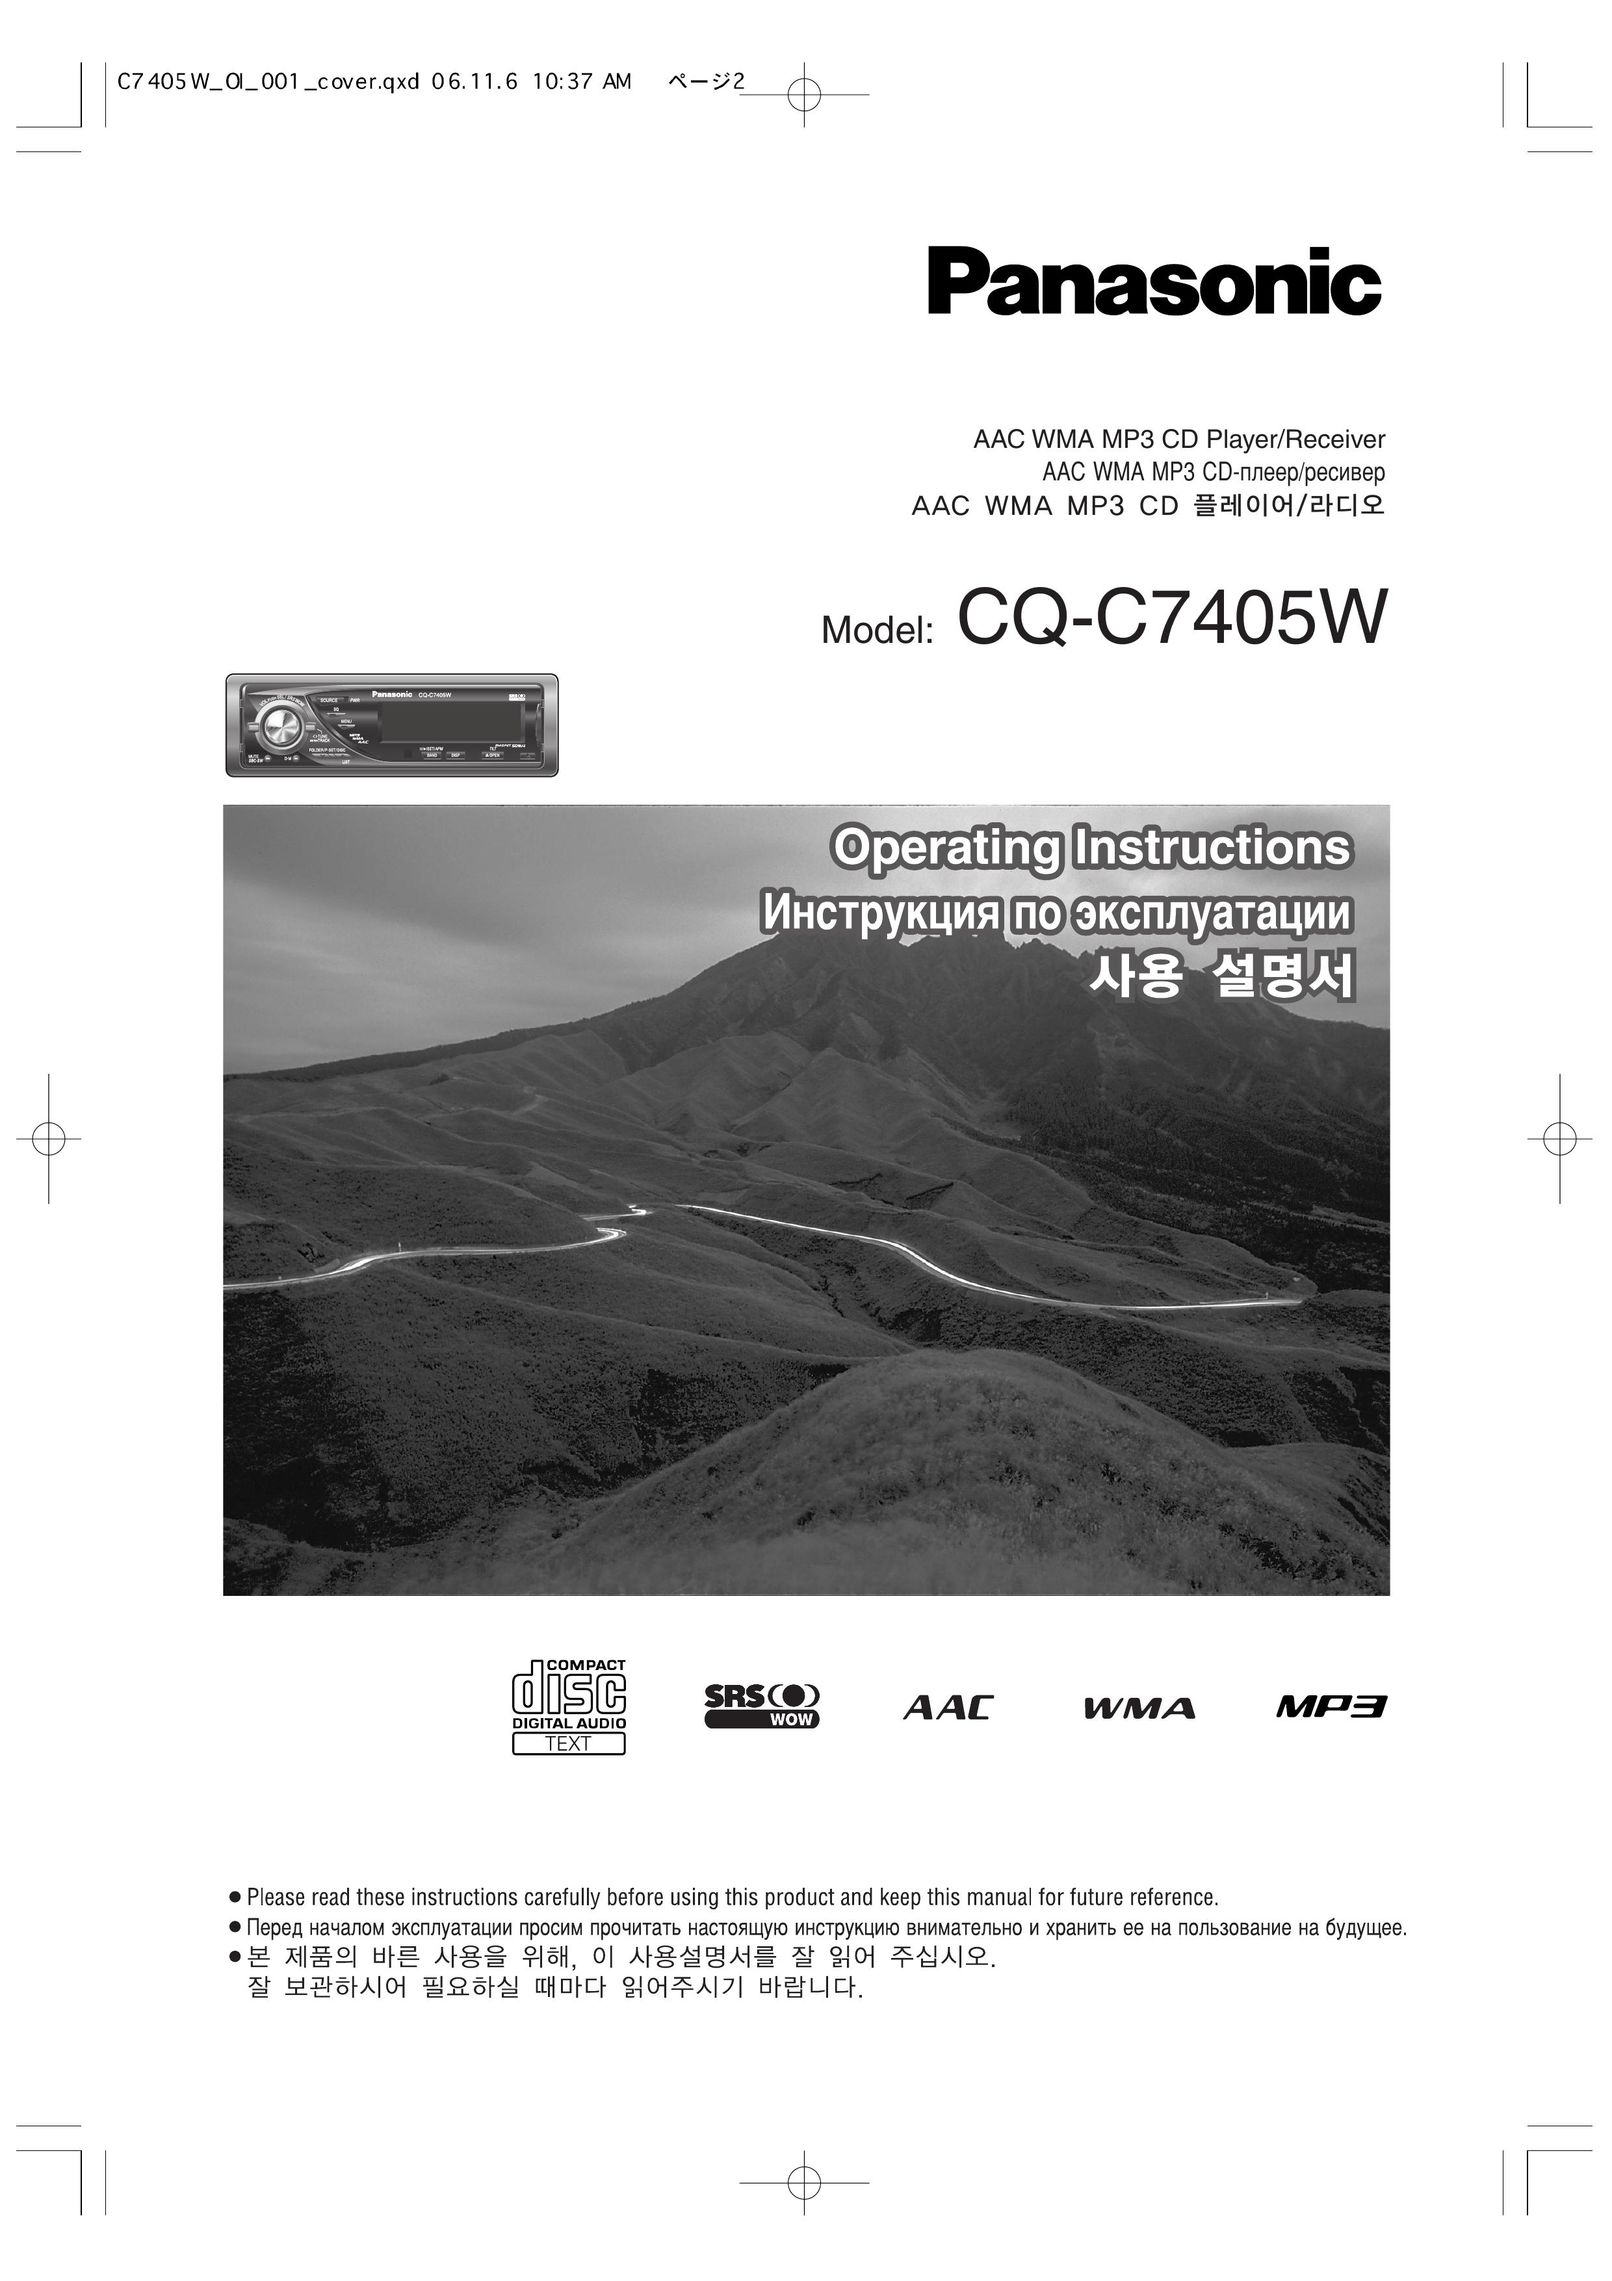 Panasonic CQ-C7405W CD Player User Manual